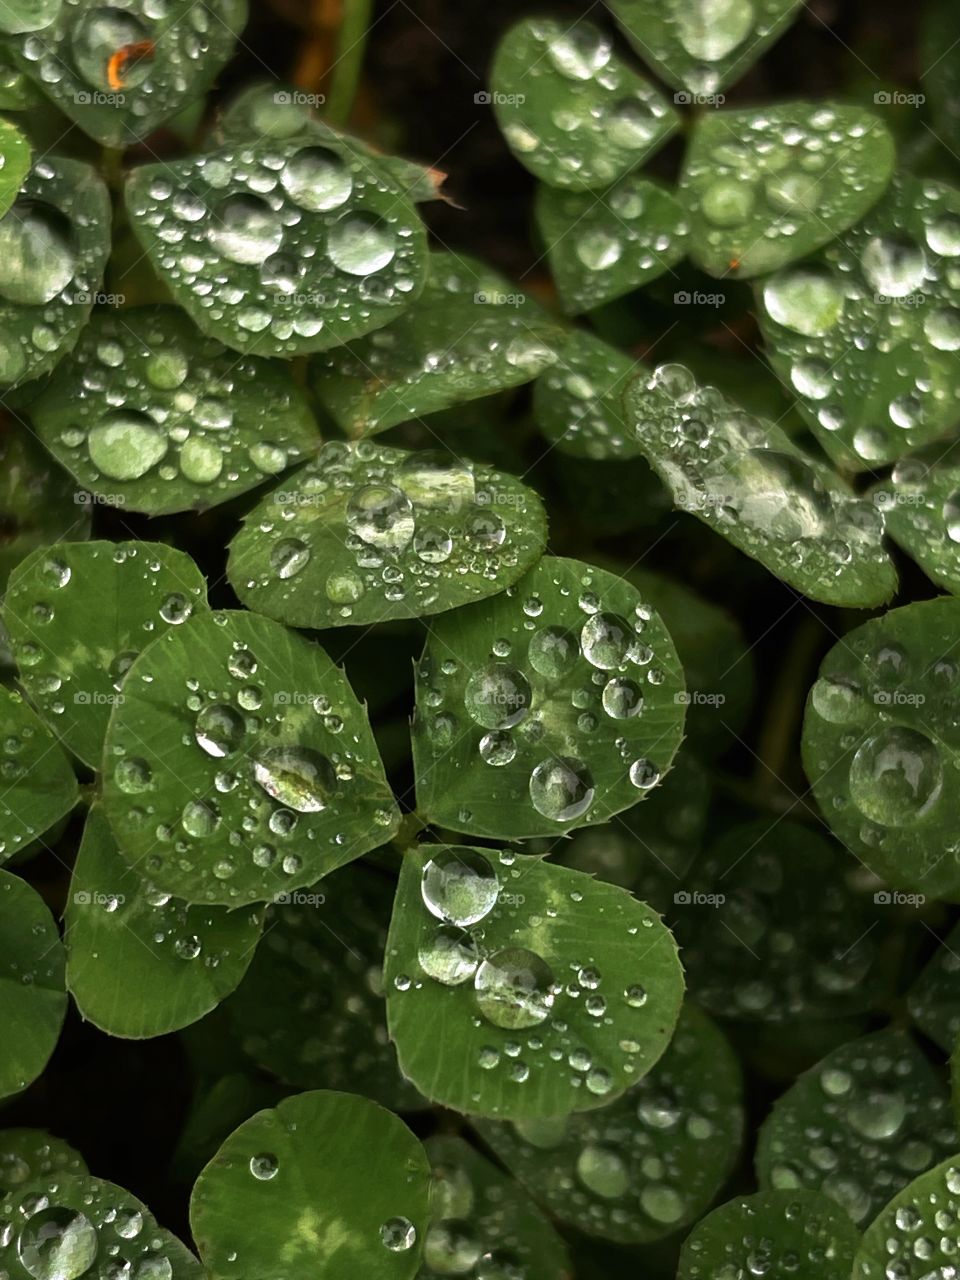 Clover plants rainfall rain storm droplets drops water plant nature outdoors Rainwater raindrops 